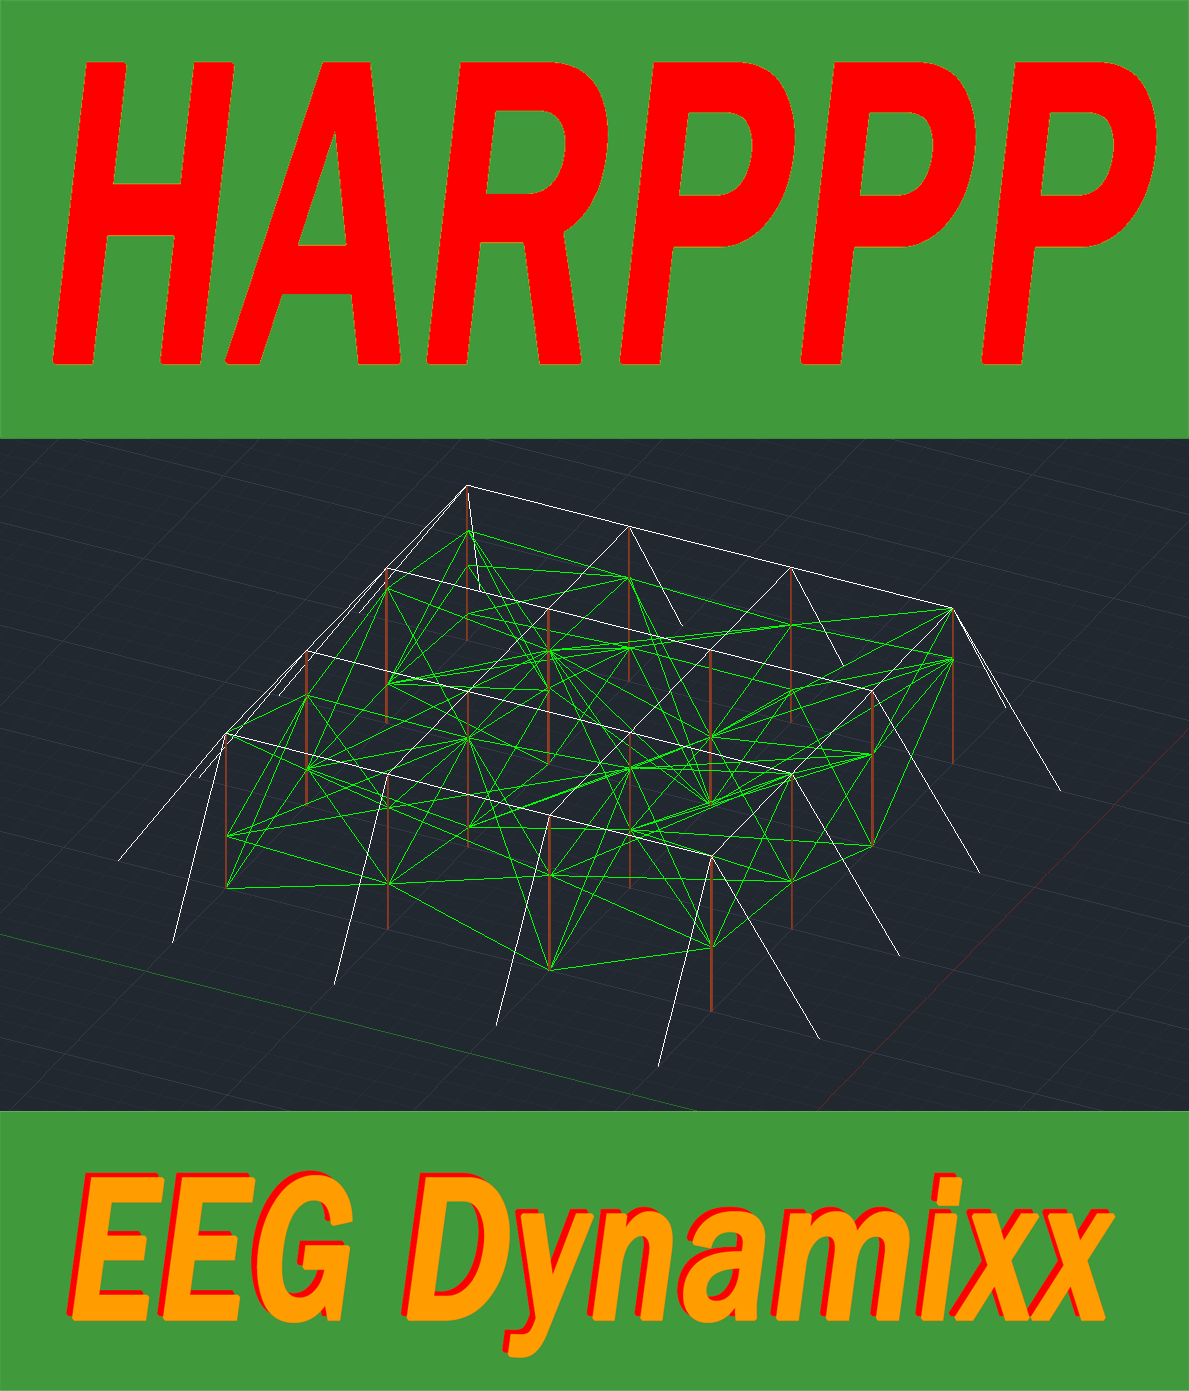 01-03 - HARPPP-EEG[flattened,trimmed] - (2013,06,29)